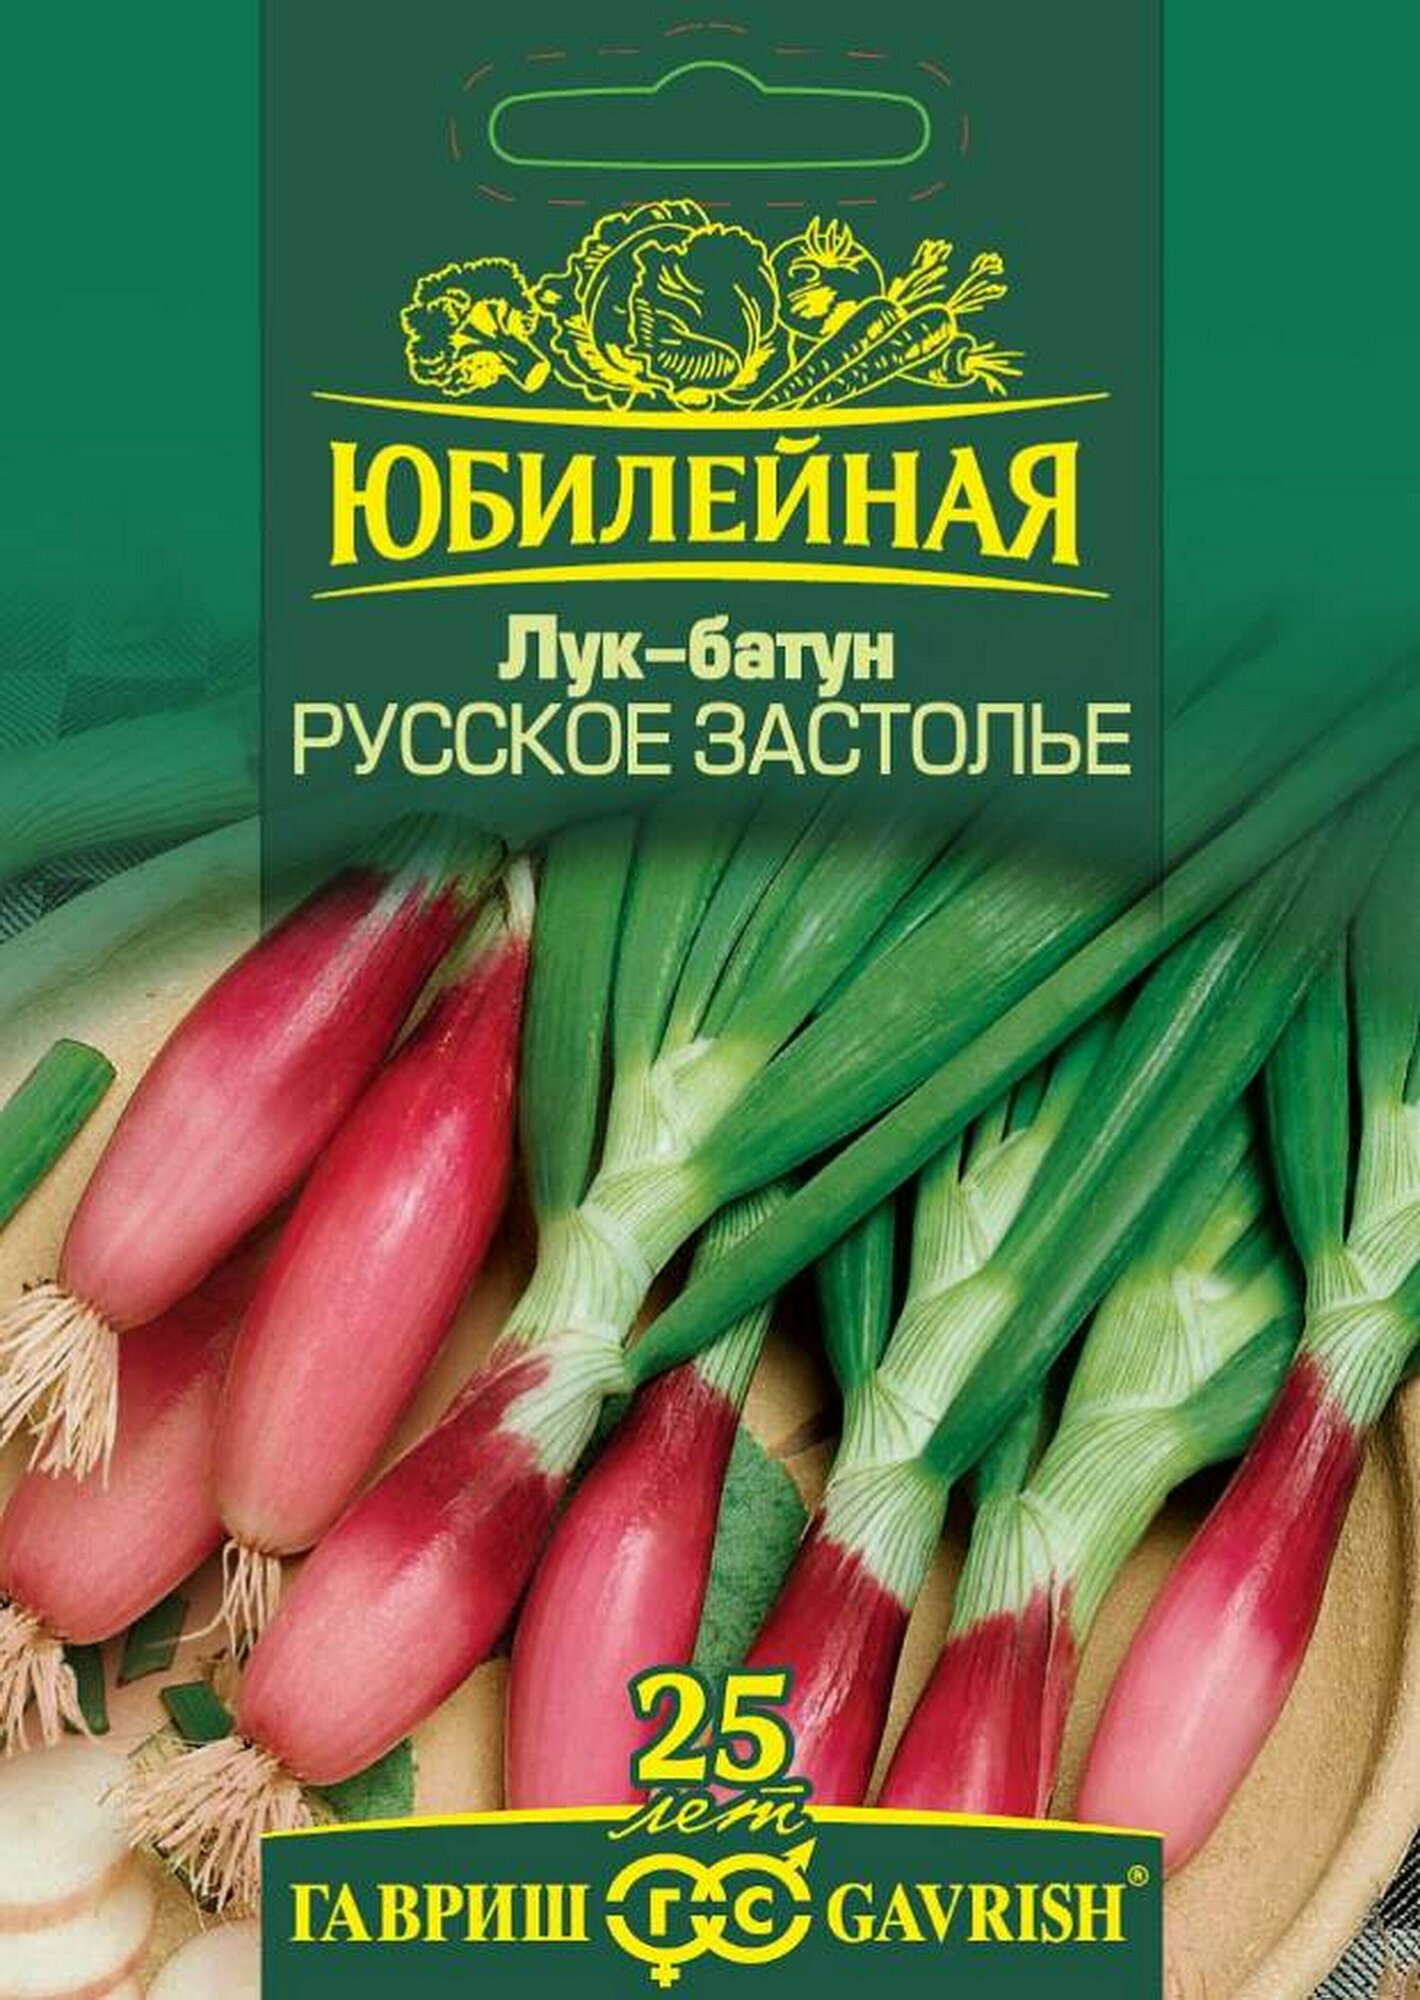 Семена Лук-батун Русское Застолье 2 грамма семян Гавриш